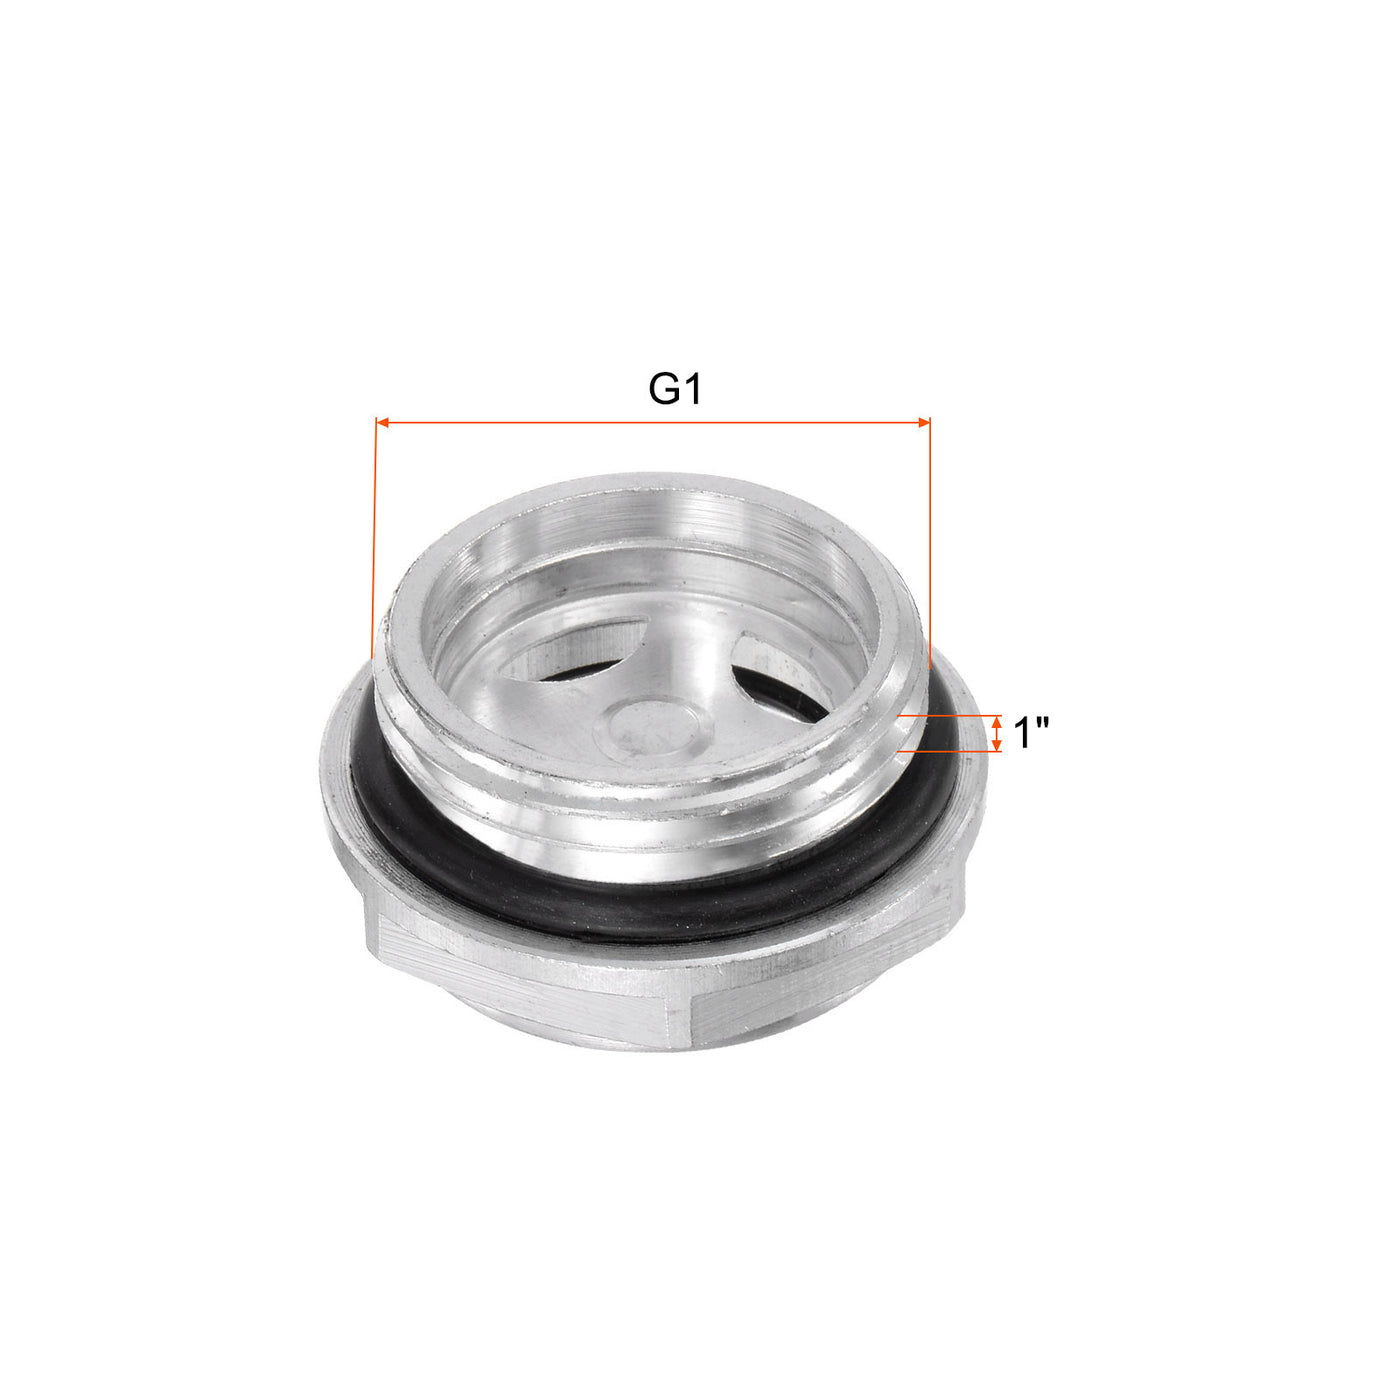 uxcell Uxcell Air Compressor Oil Level Gauge Sight Glass G1 Male Thread Aluminum 2Pcs